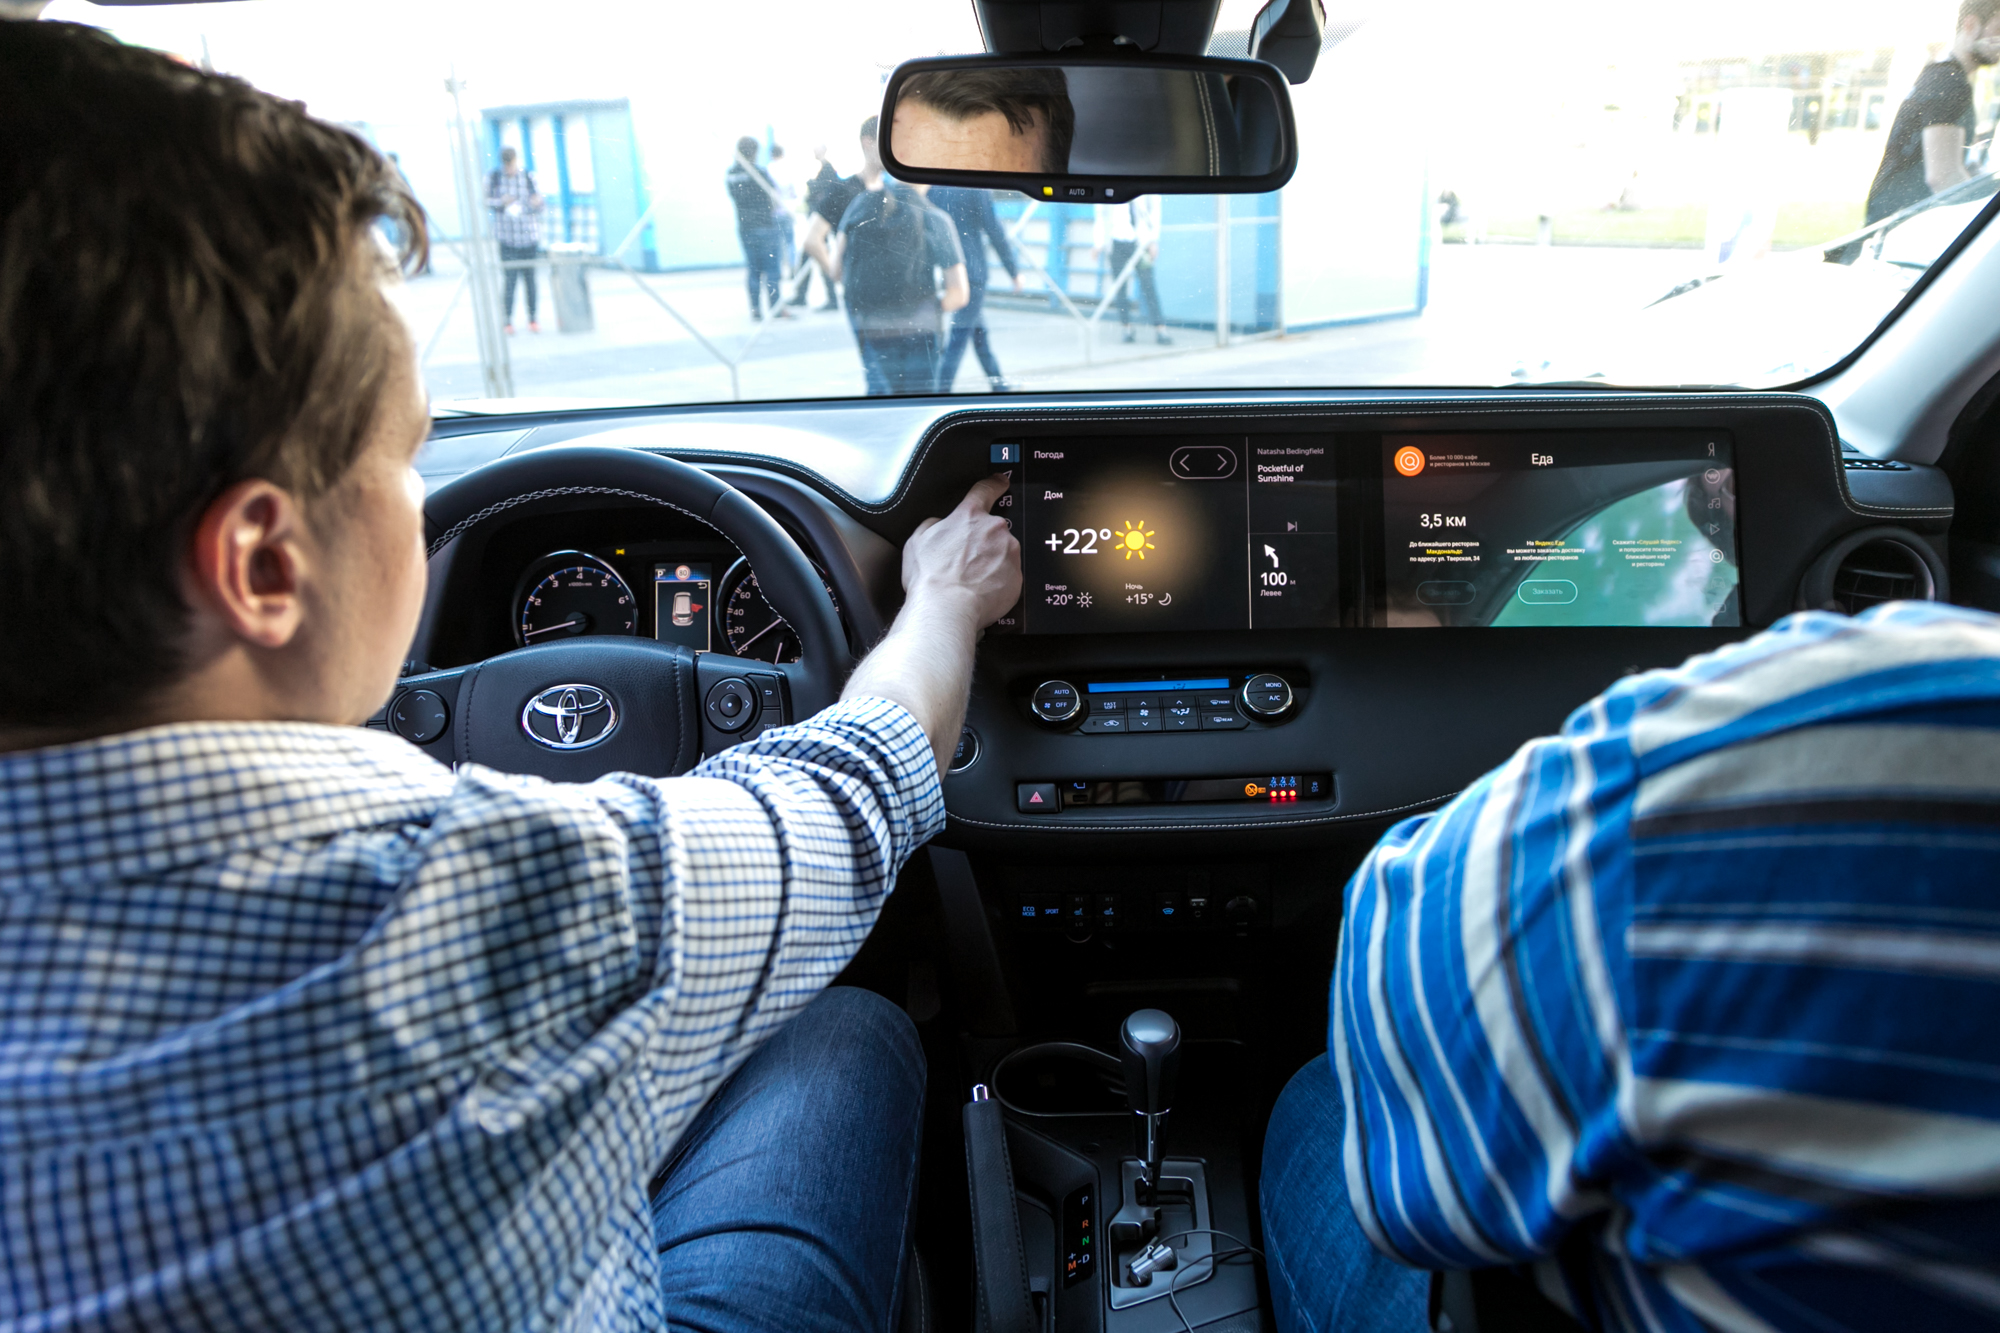 Представлен демомобиль на базе Toyota RAV4 с платформой «Яндекс.Авто»